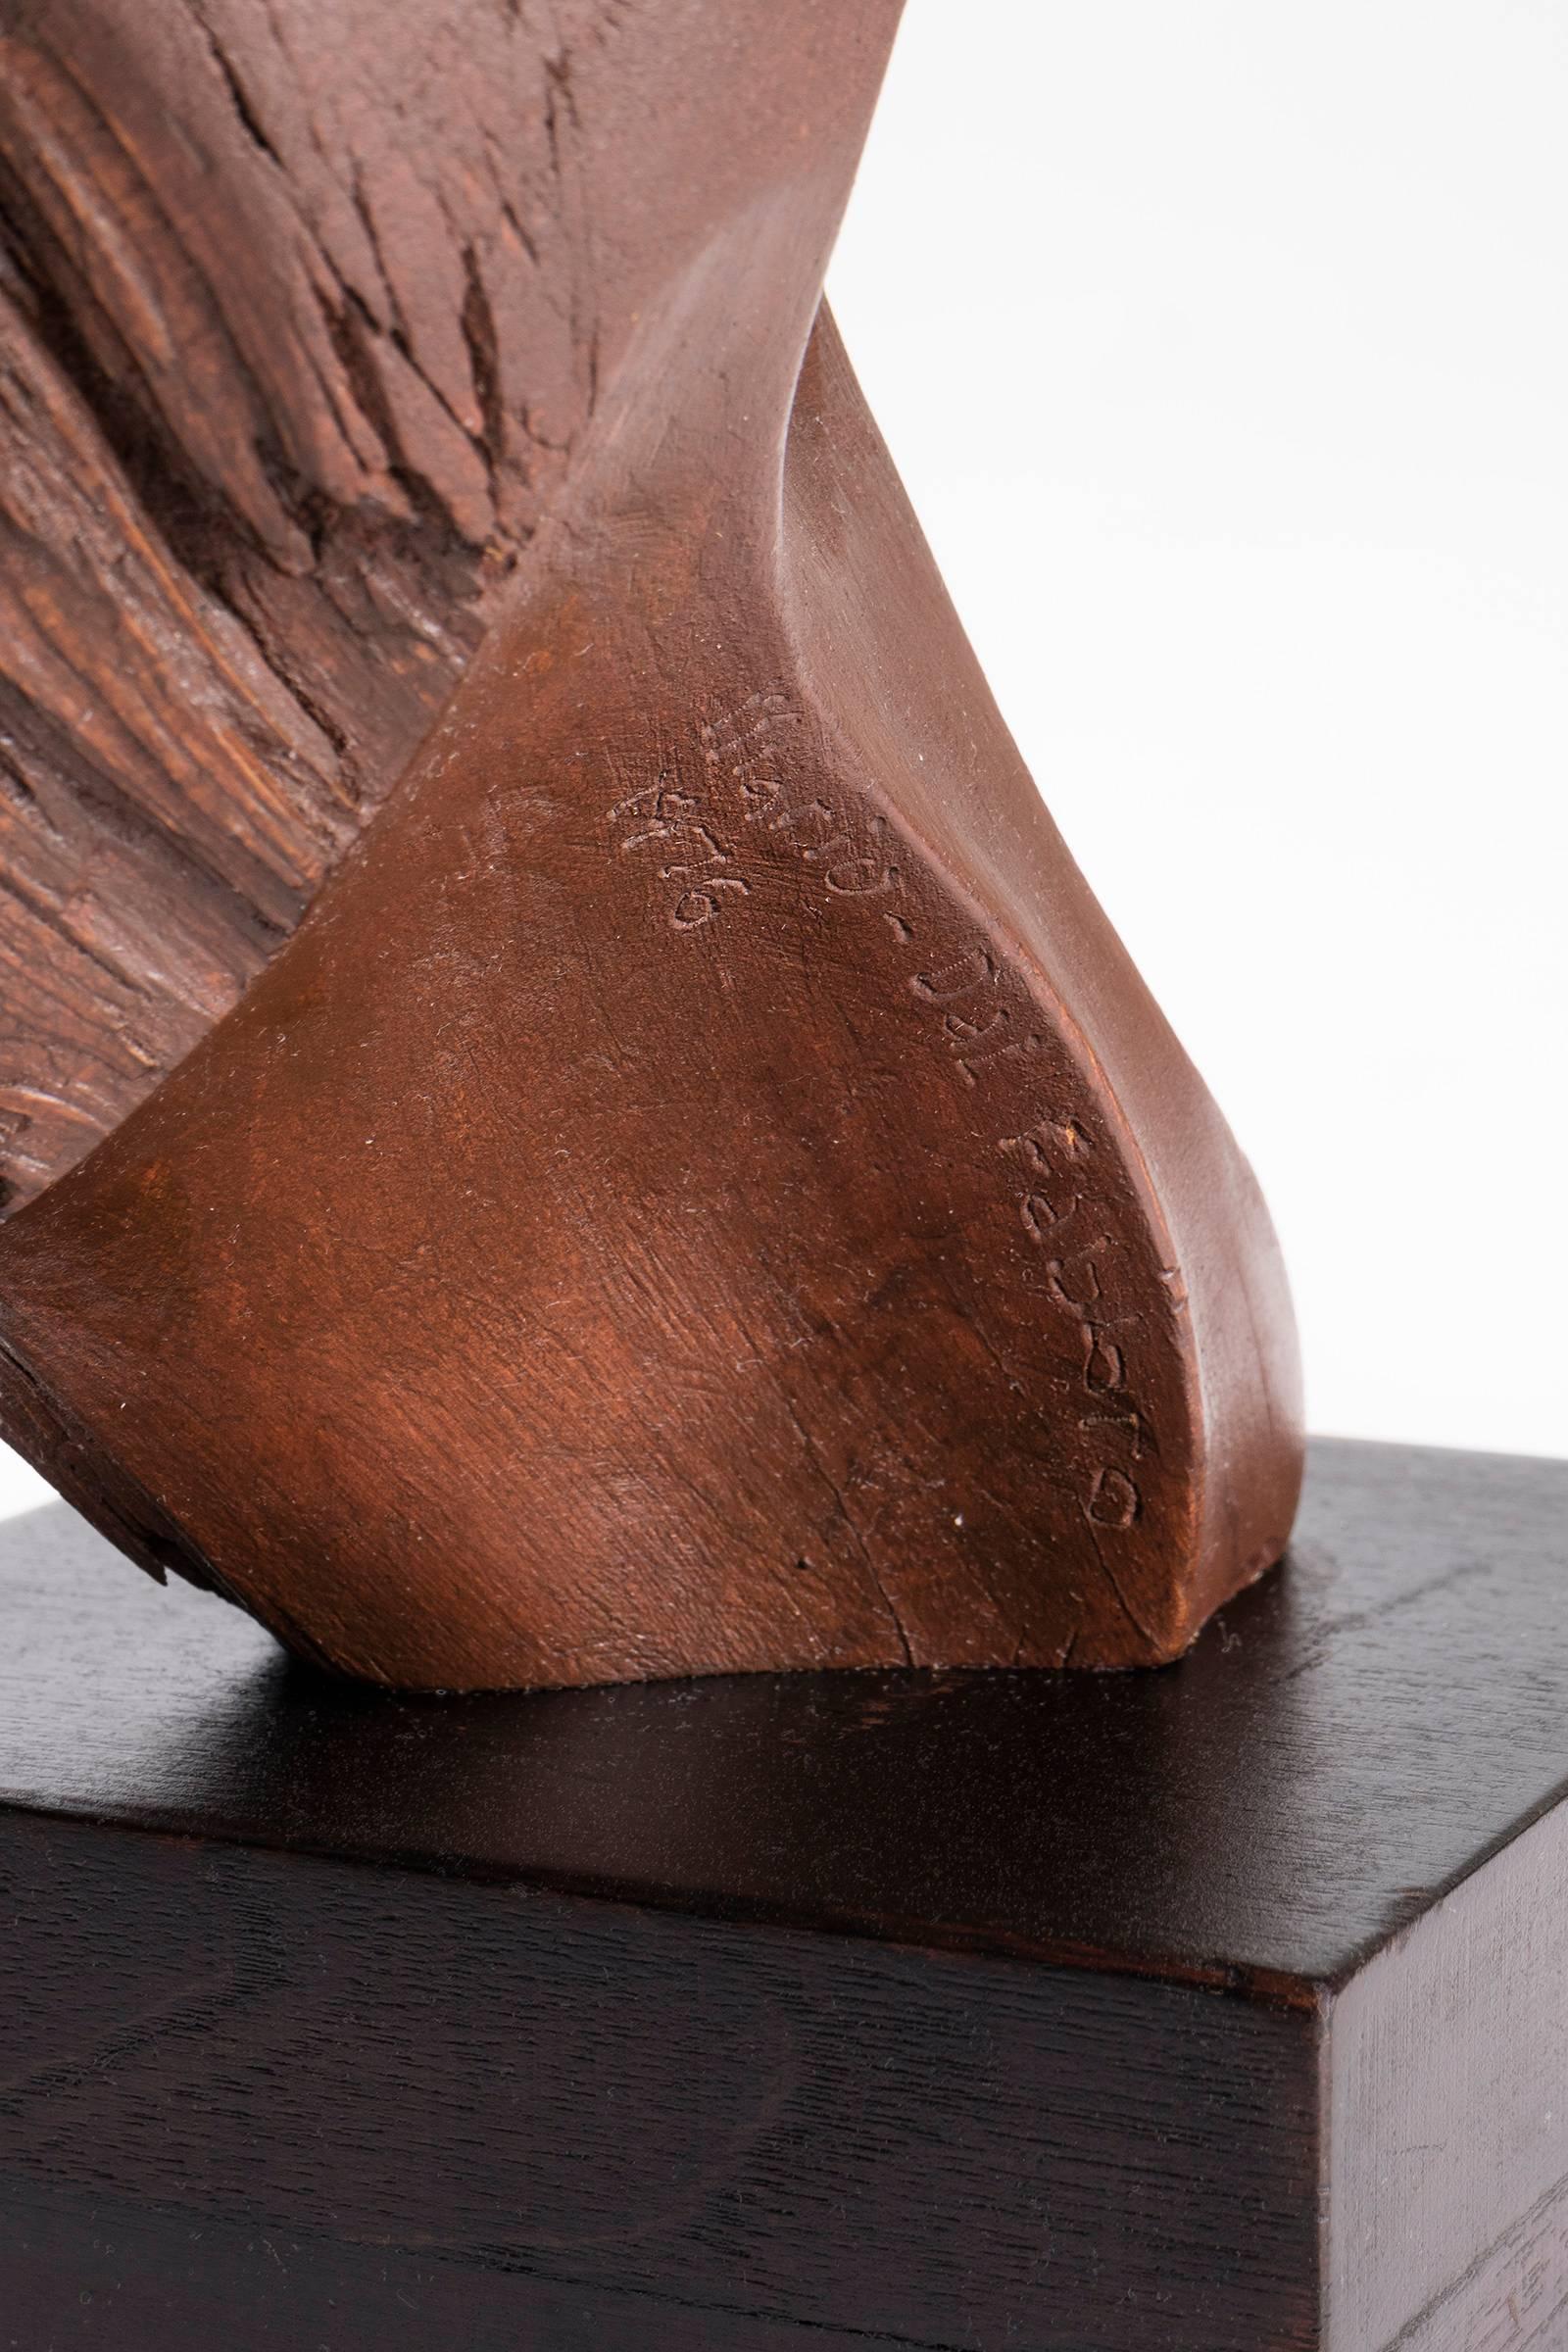 Mario Dal Fabbro Sculpture In Excellent Condition For Sale In Chicago, IL